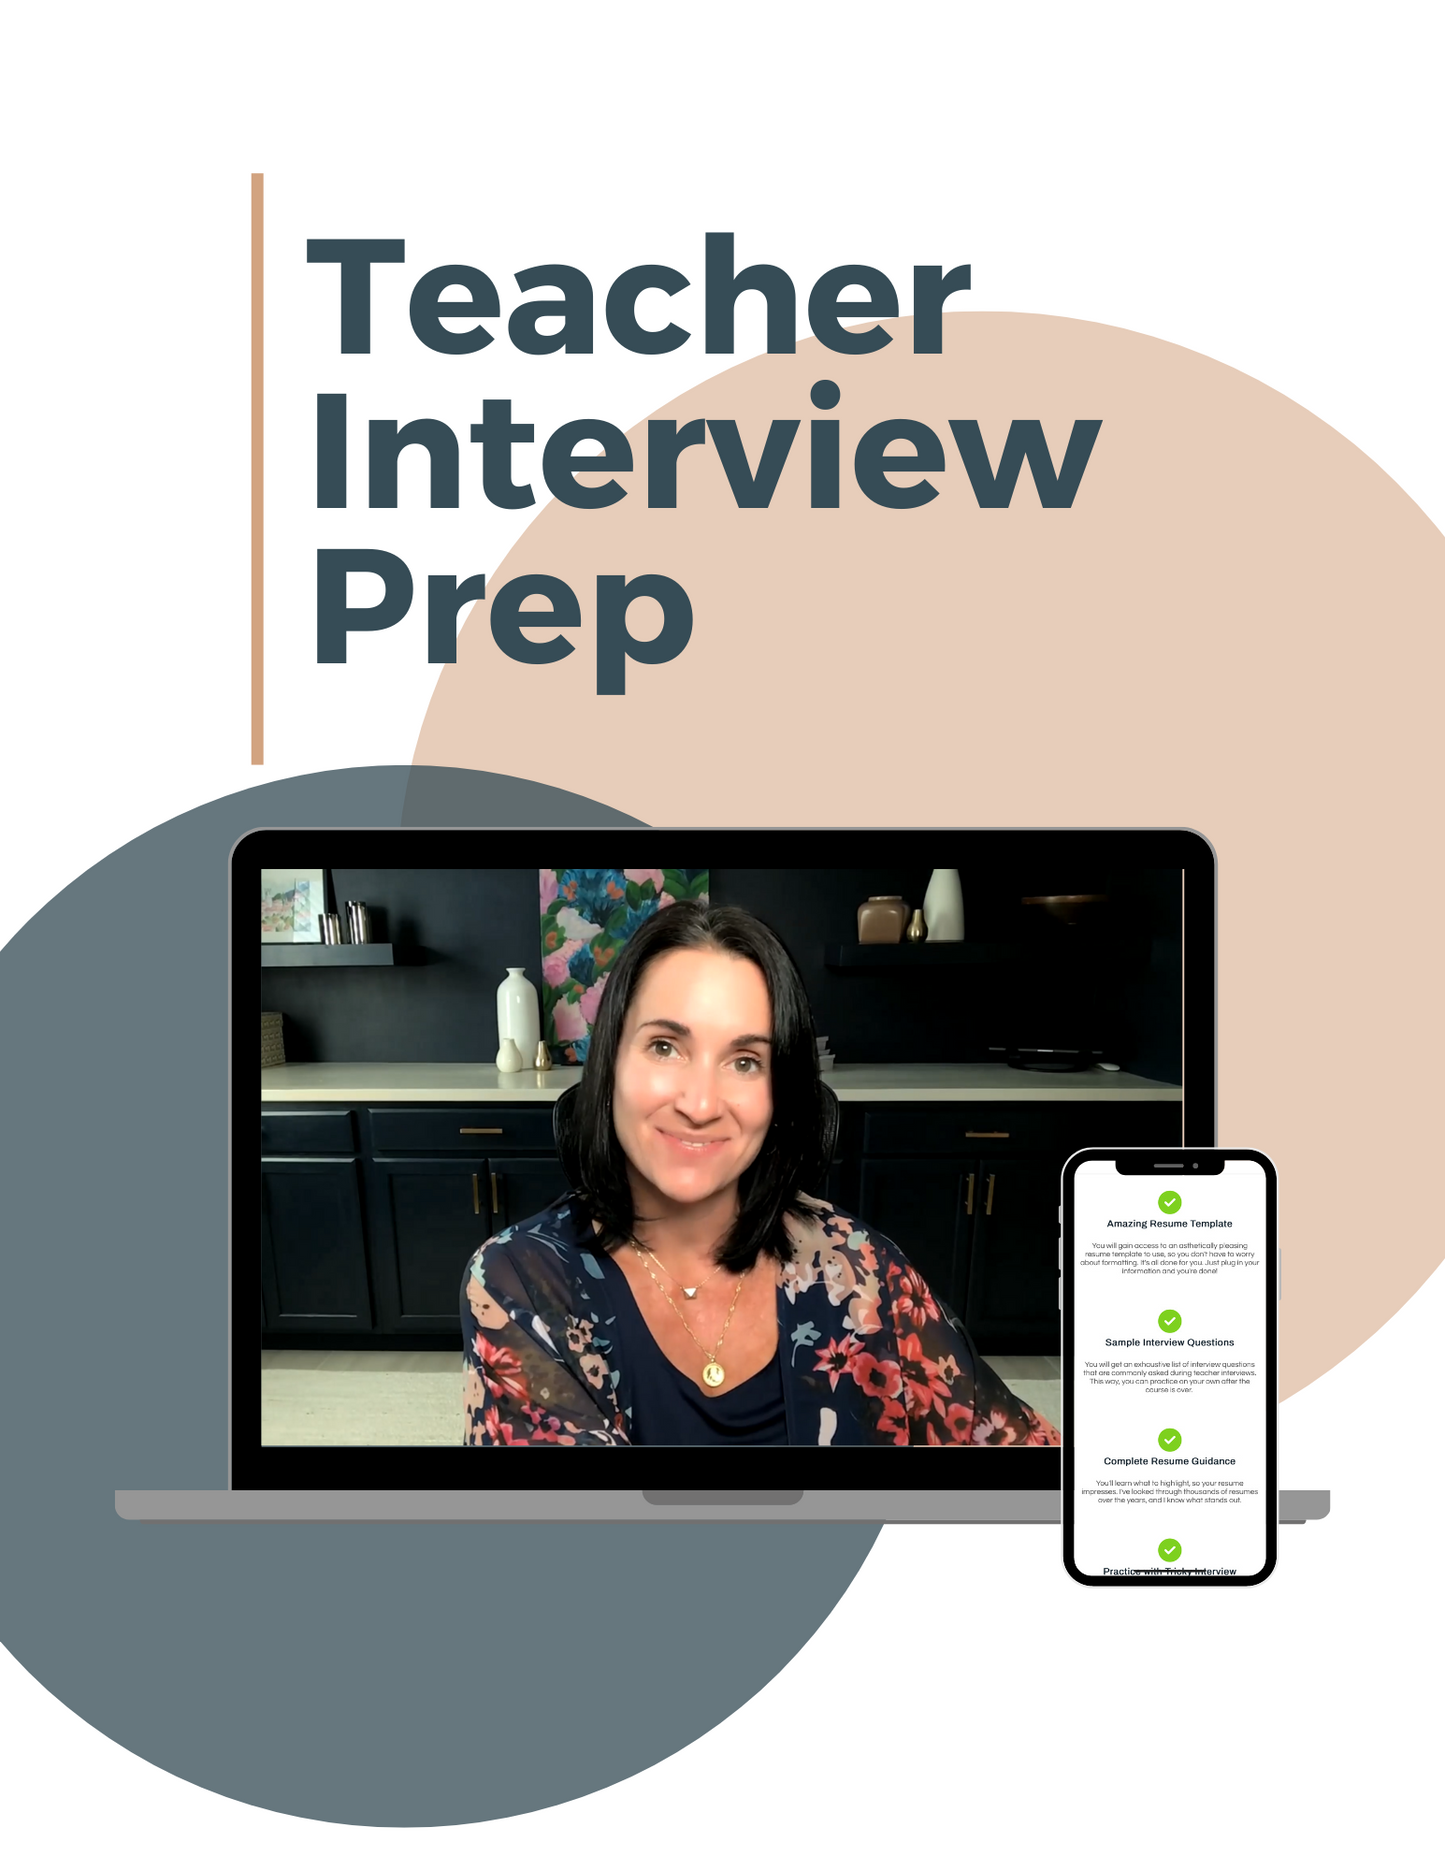 Teacher Interview Prep from Start to Finish